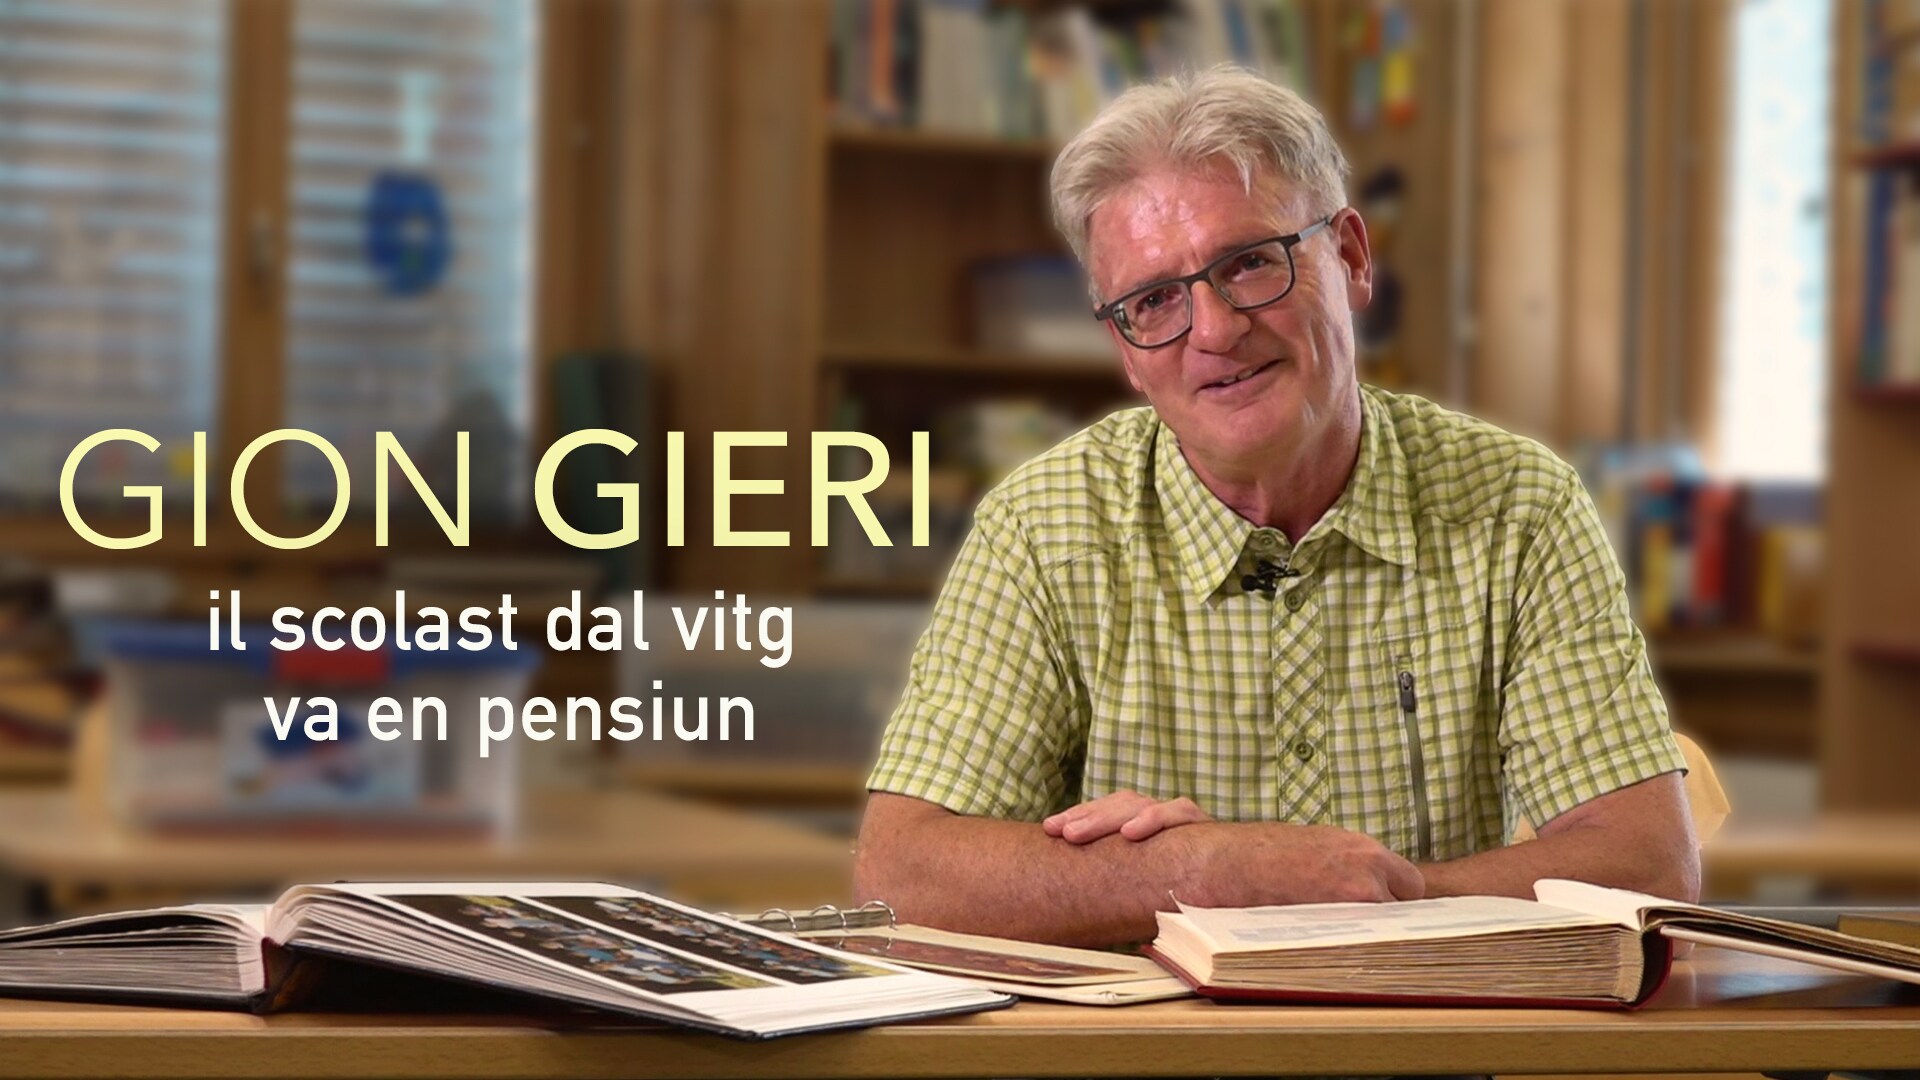 Gion GIeri - il scolast dal vitg va en pensiun